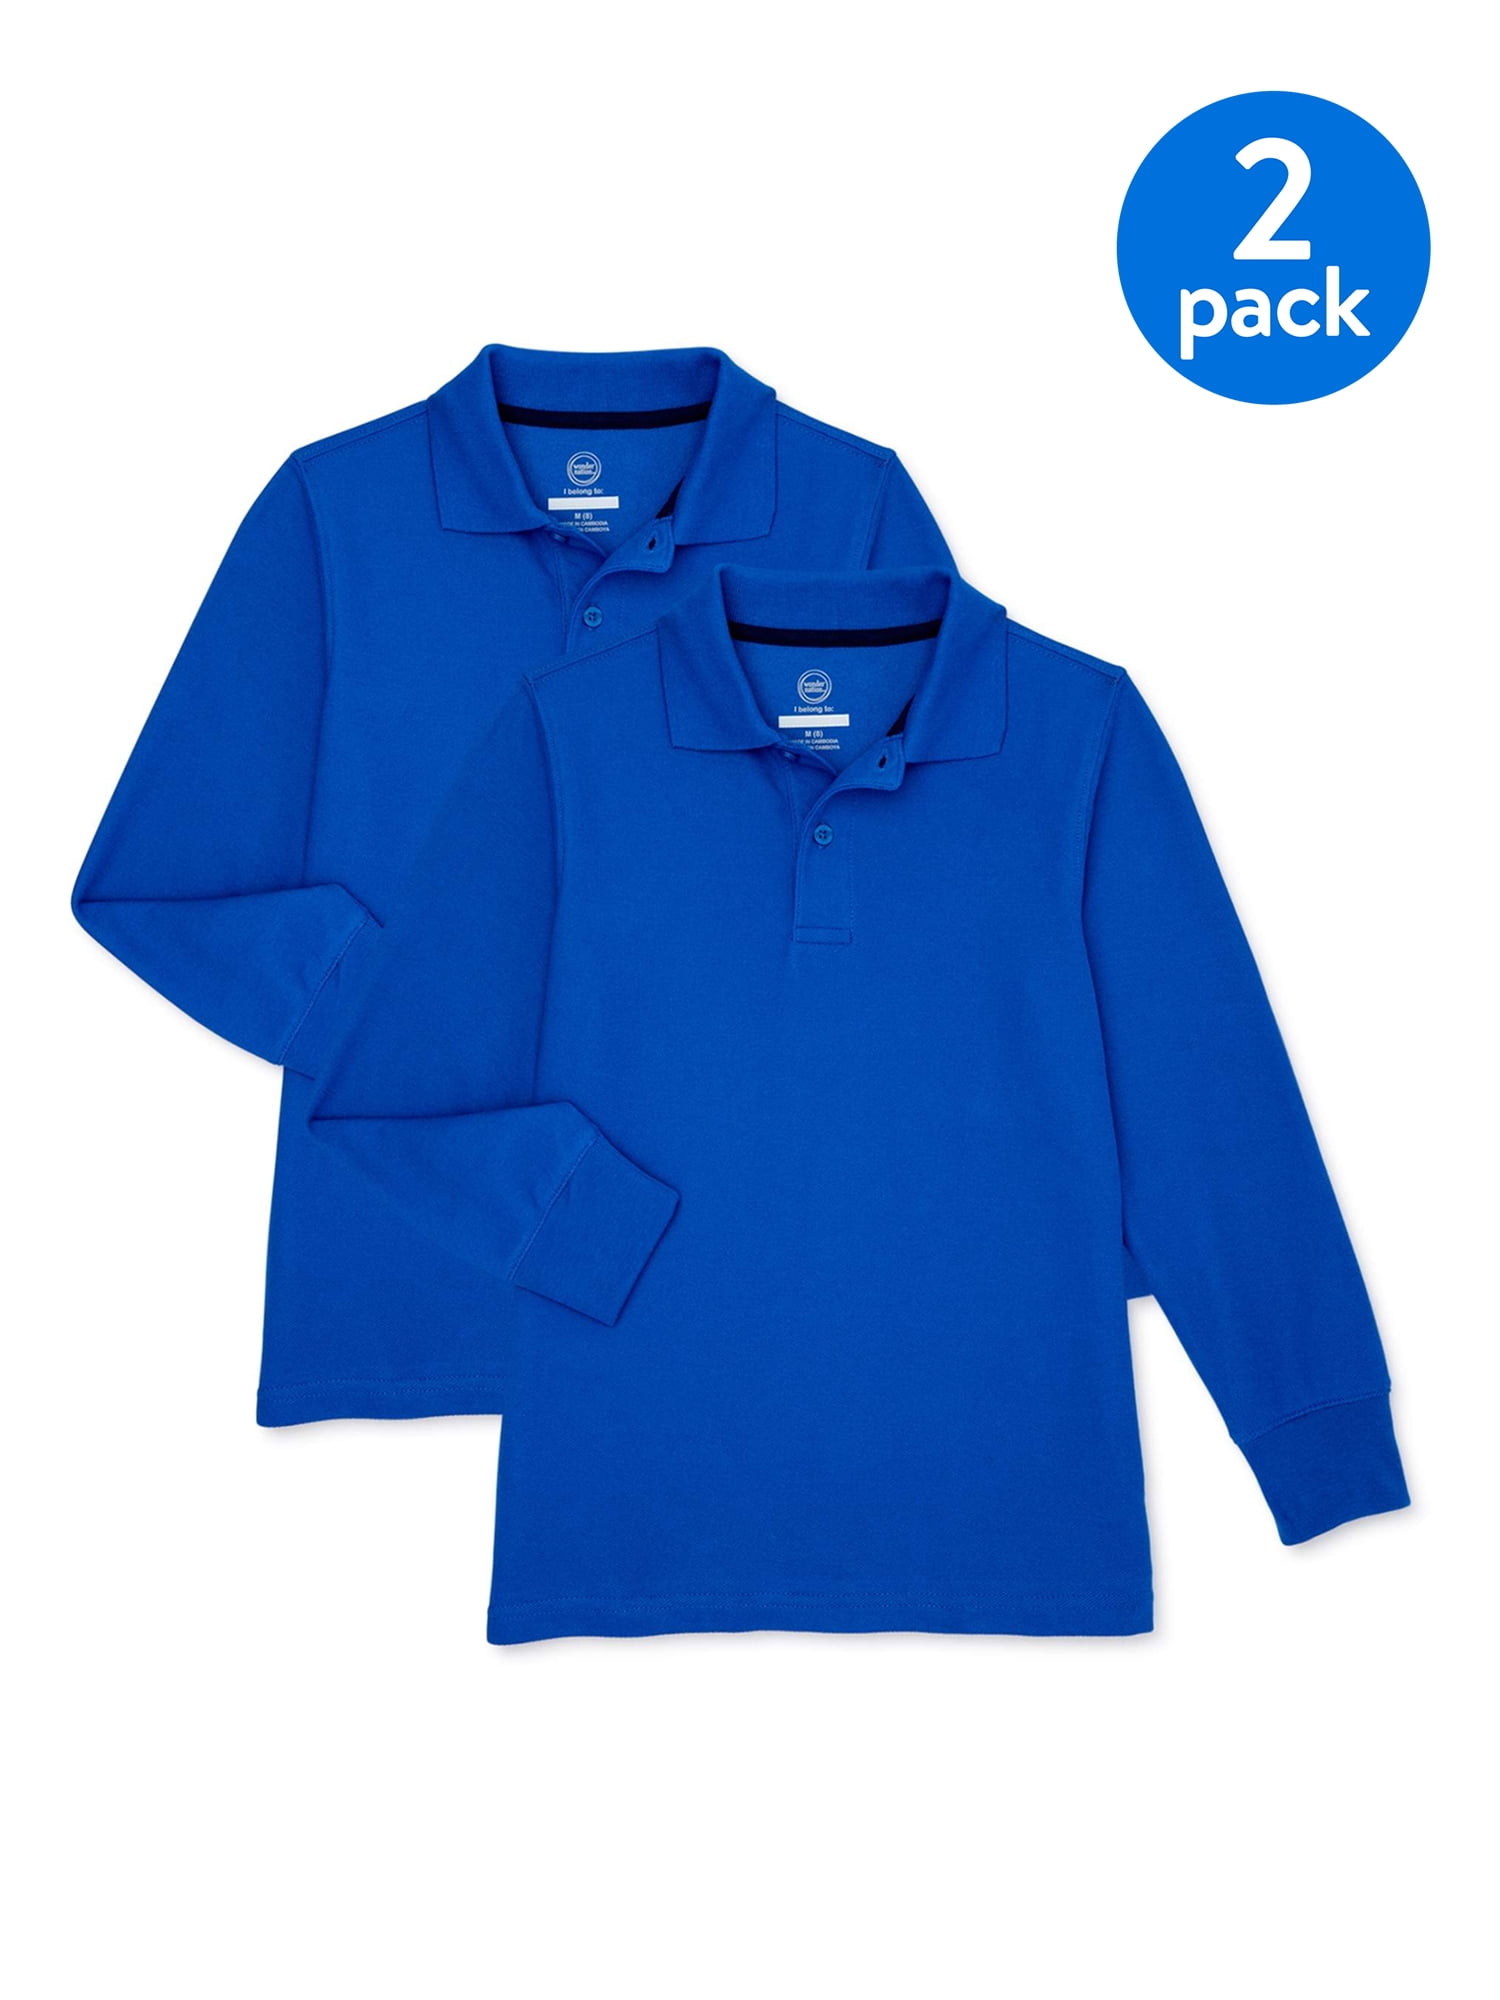 Boys French Toast $18 Blue/Gray Long Sleeve Fleece Pullover Sizes 4 & 5